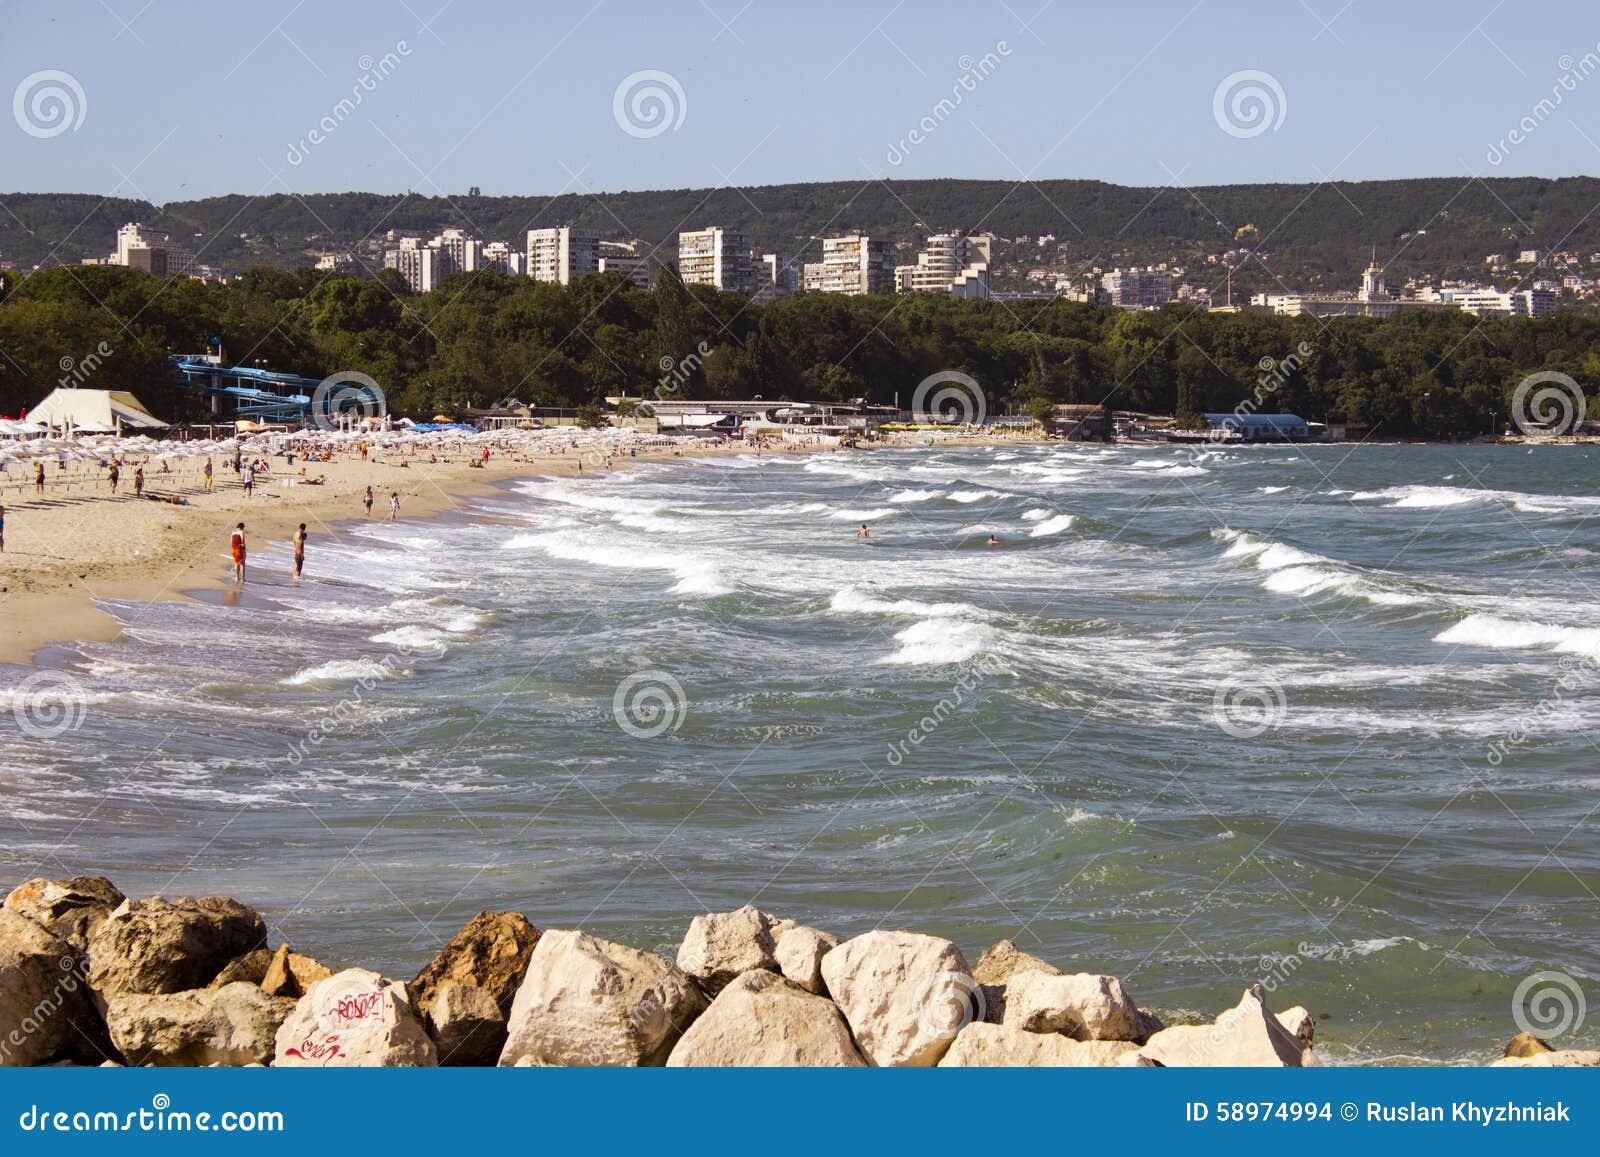 Bulgaria Varna beach stock photo. Image of landscape - 58974994